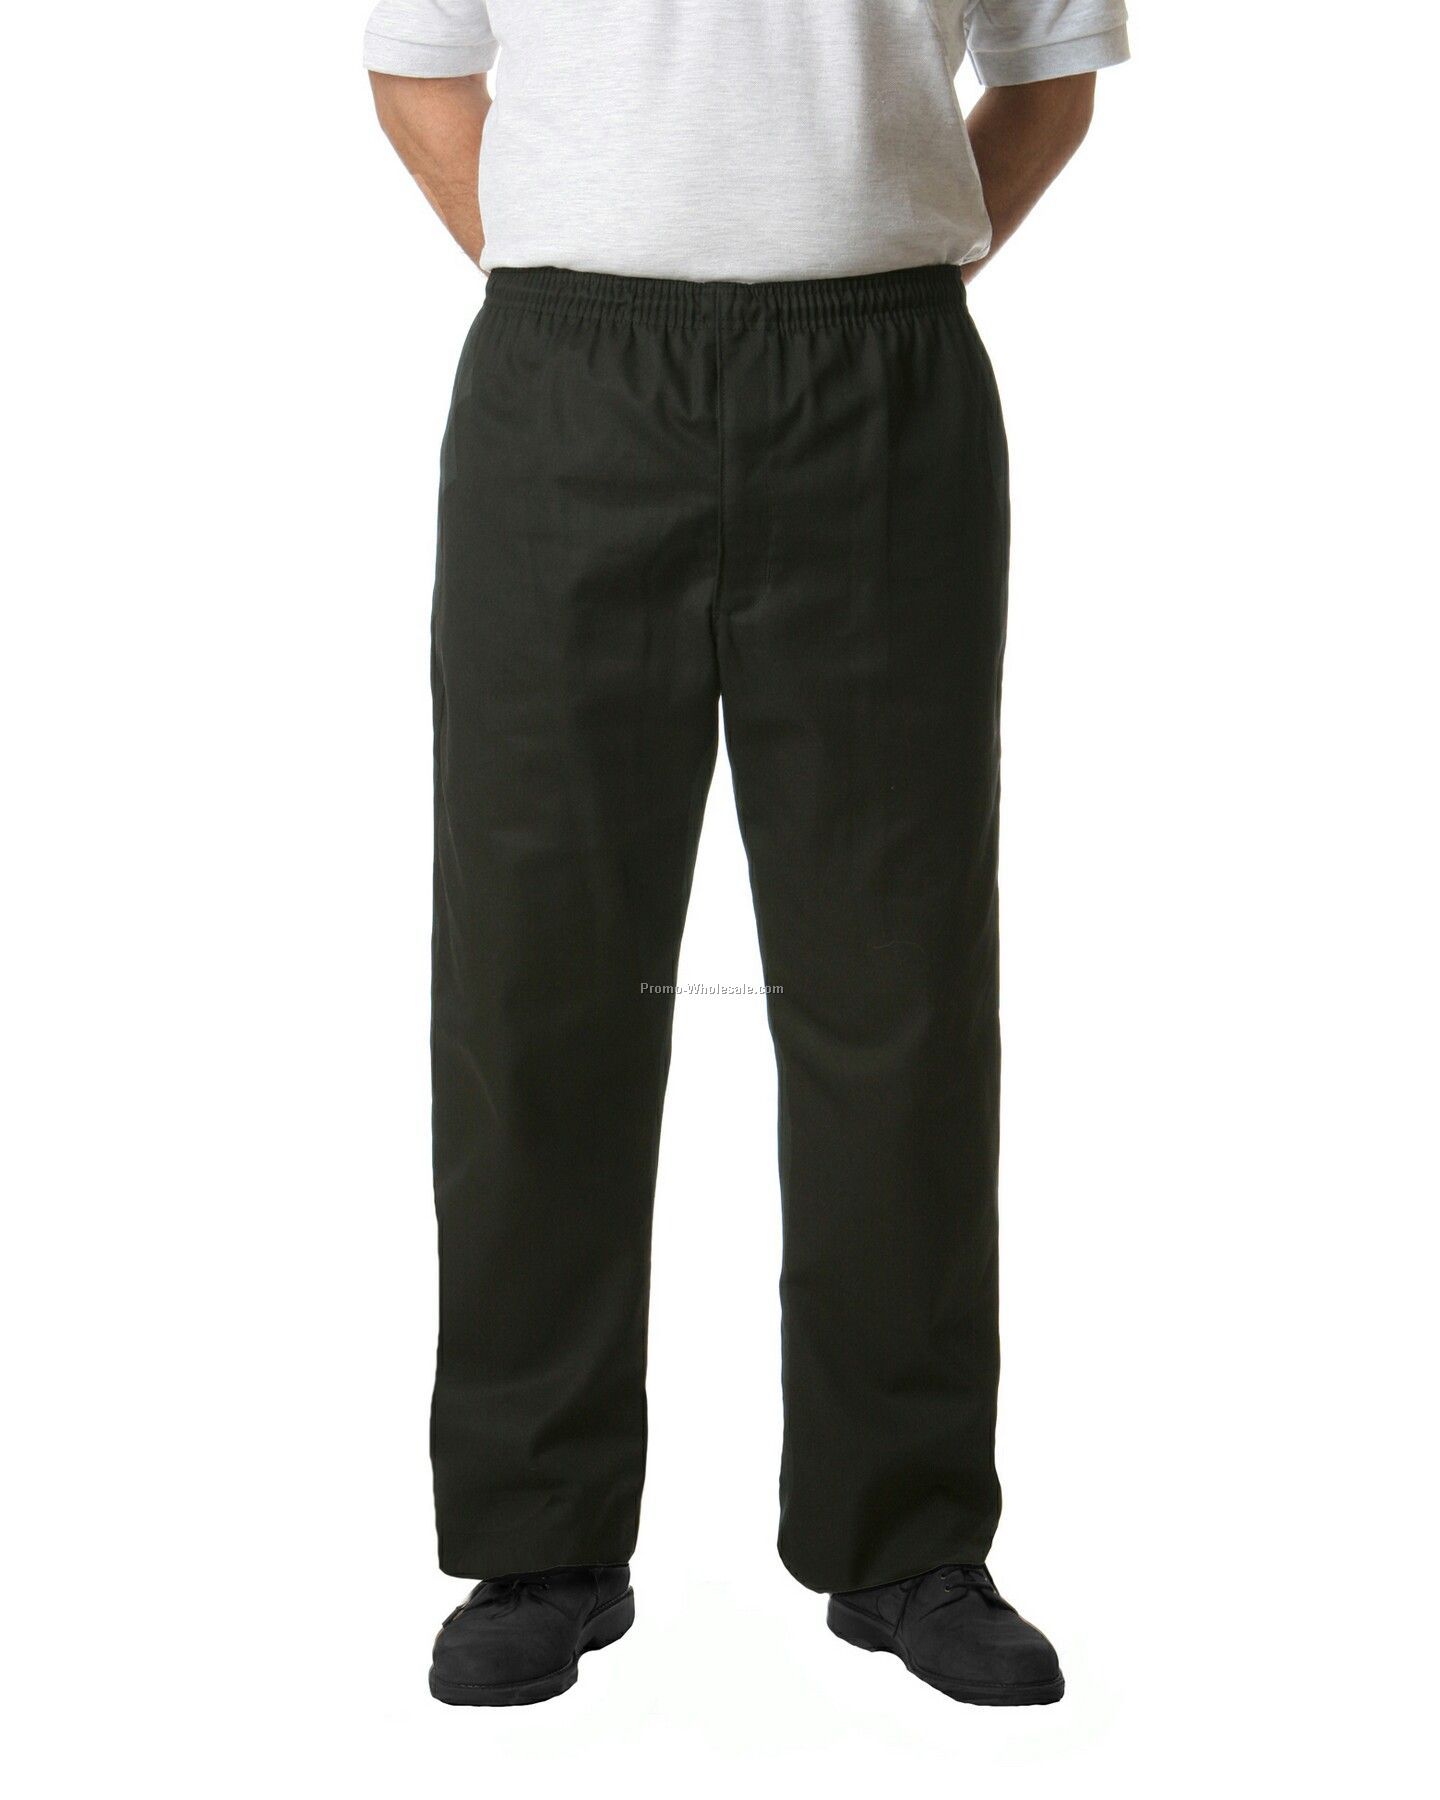 Chef Baggies Pants (Medium/ Black & White Chalk Stripe)